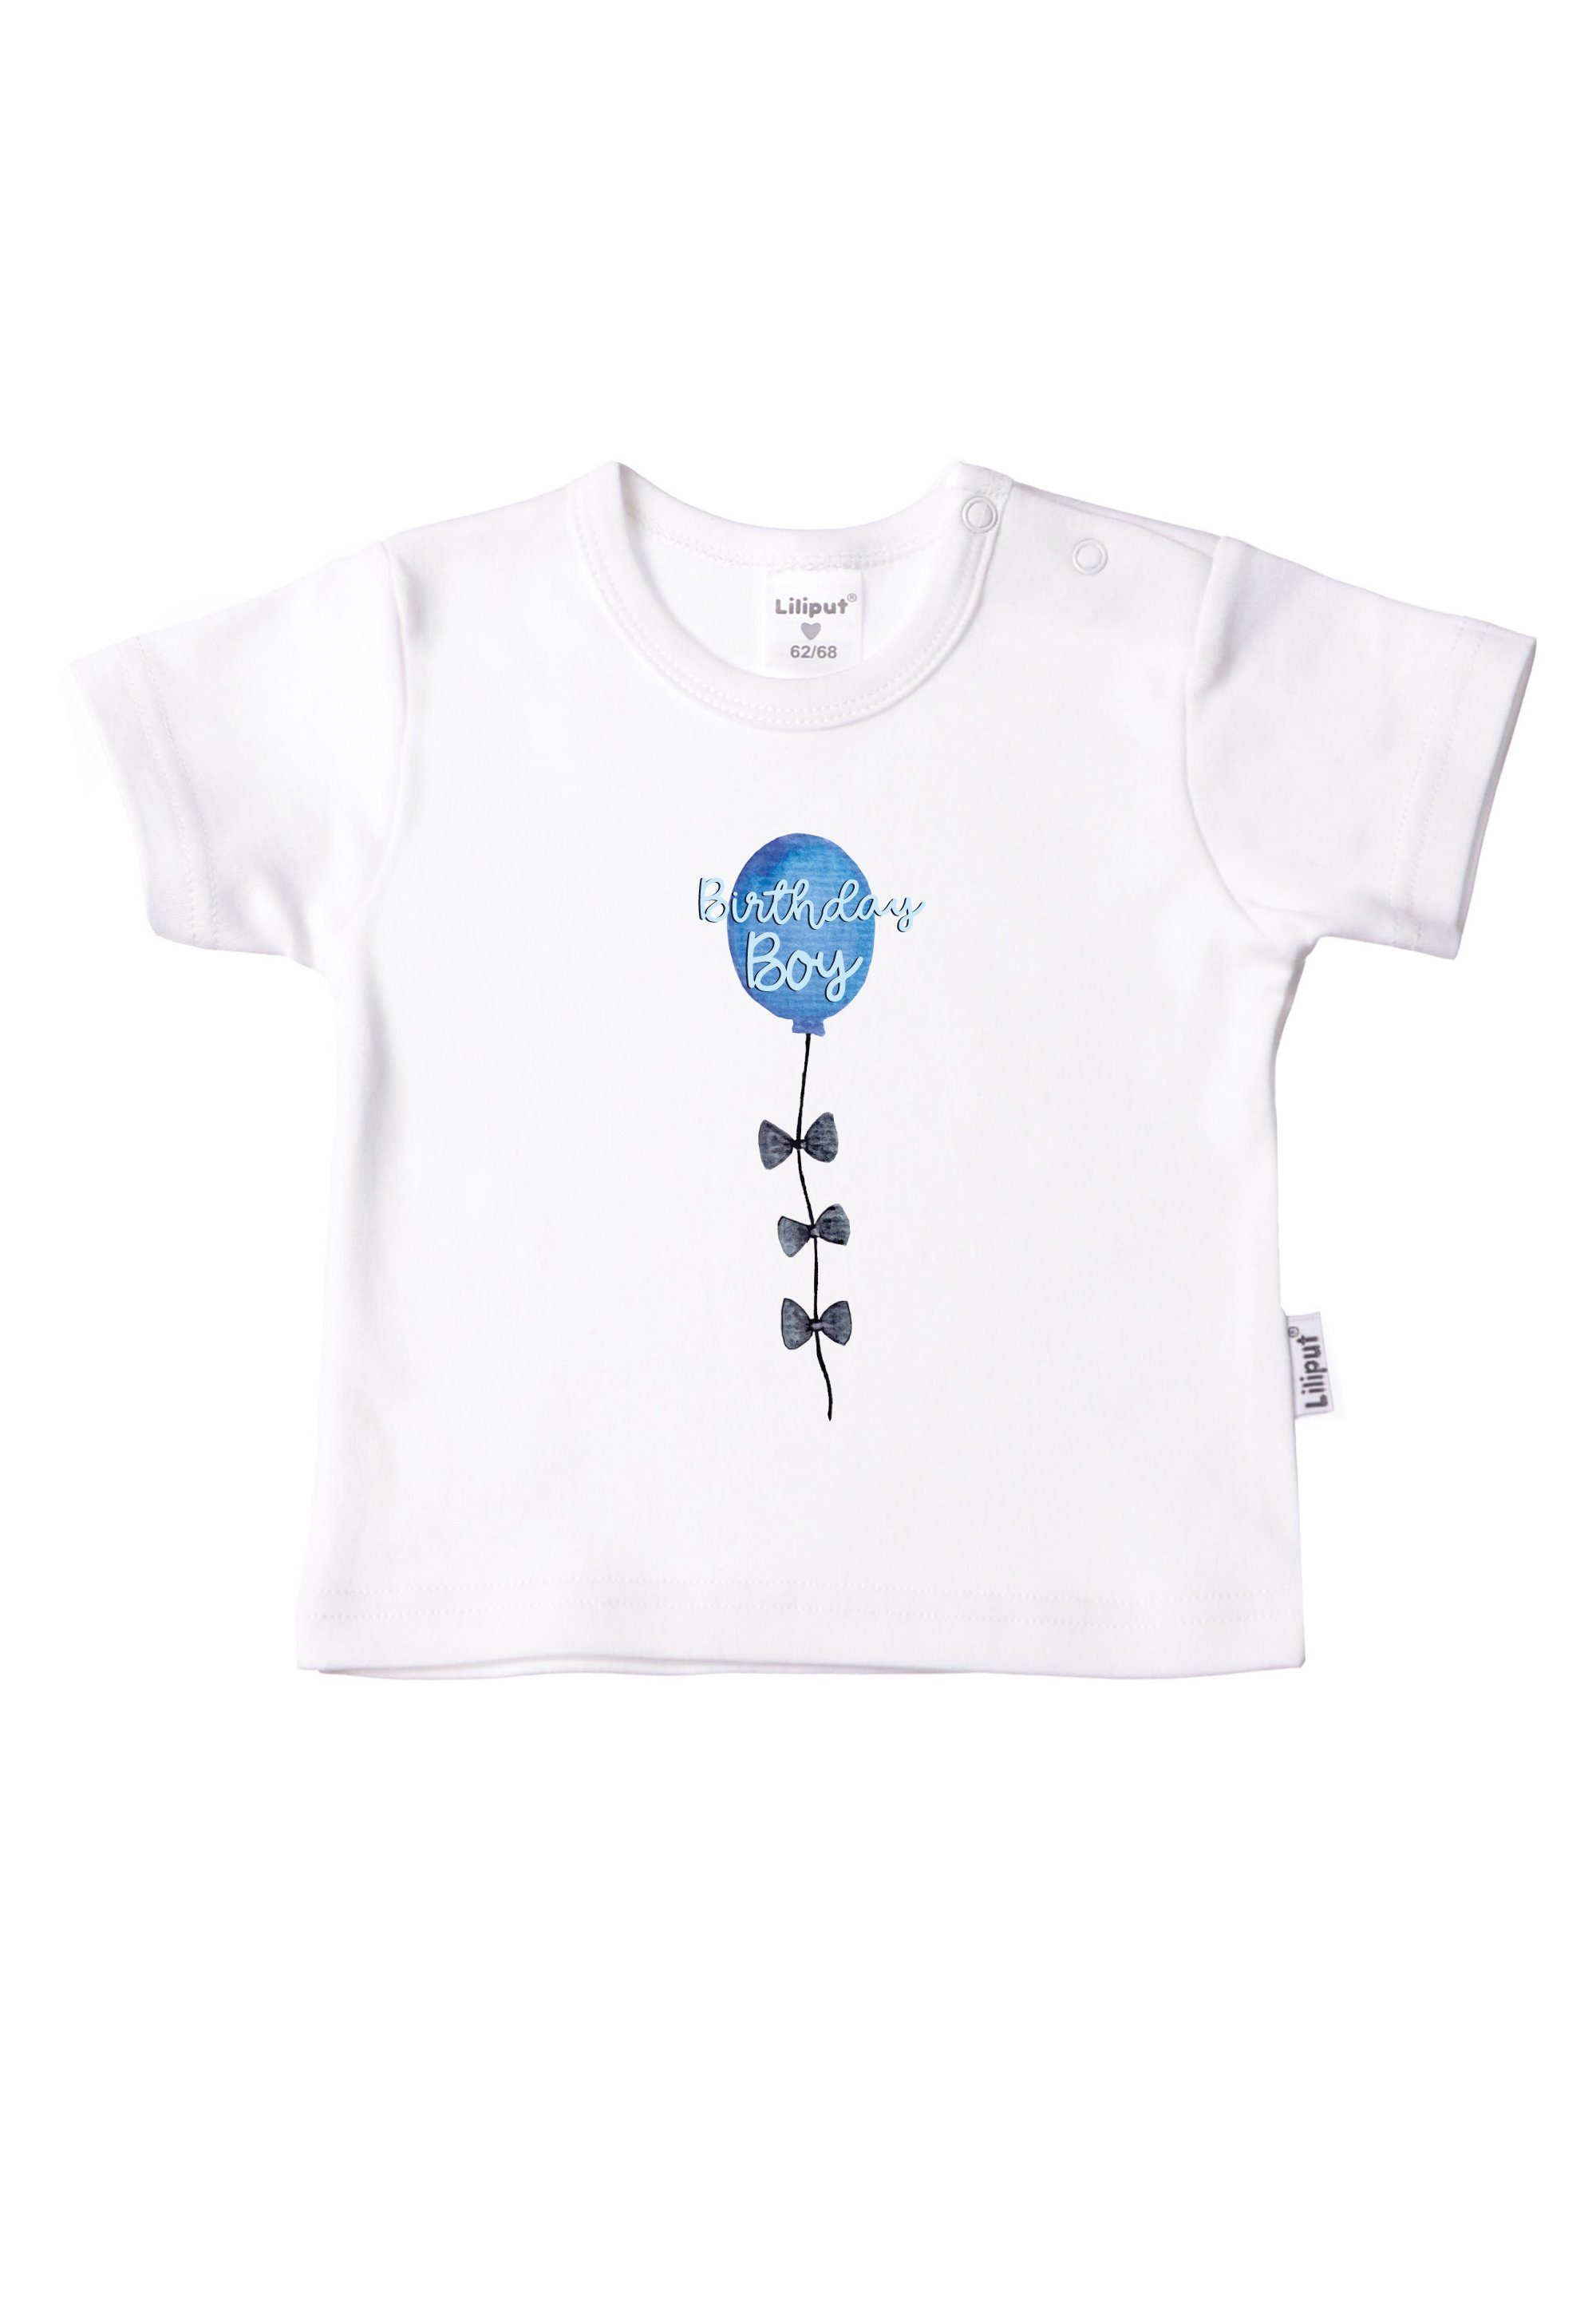 Outlet-Sonderverkauf Liliput T-Shirt Birthday Boy mit niedlichem Frontprint